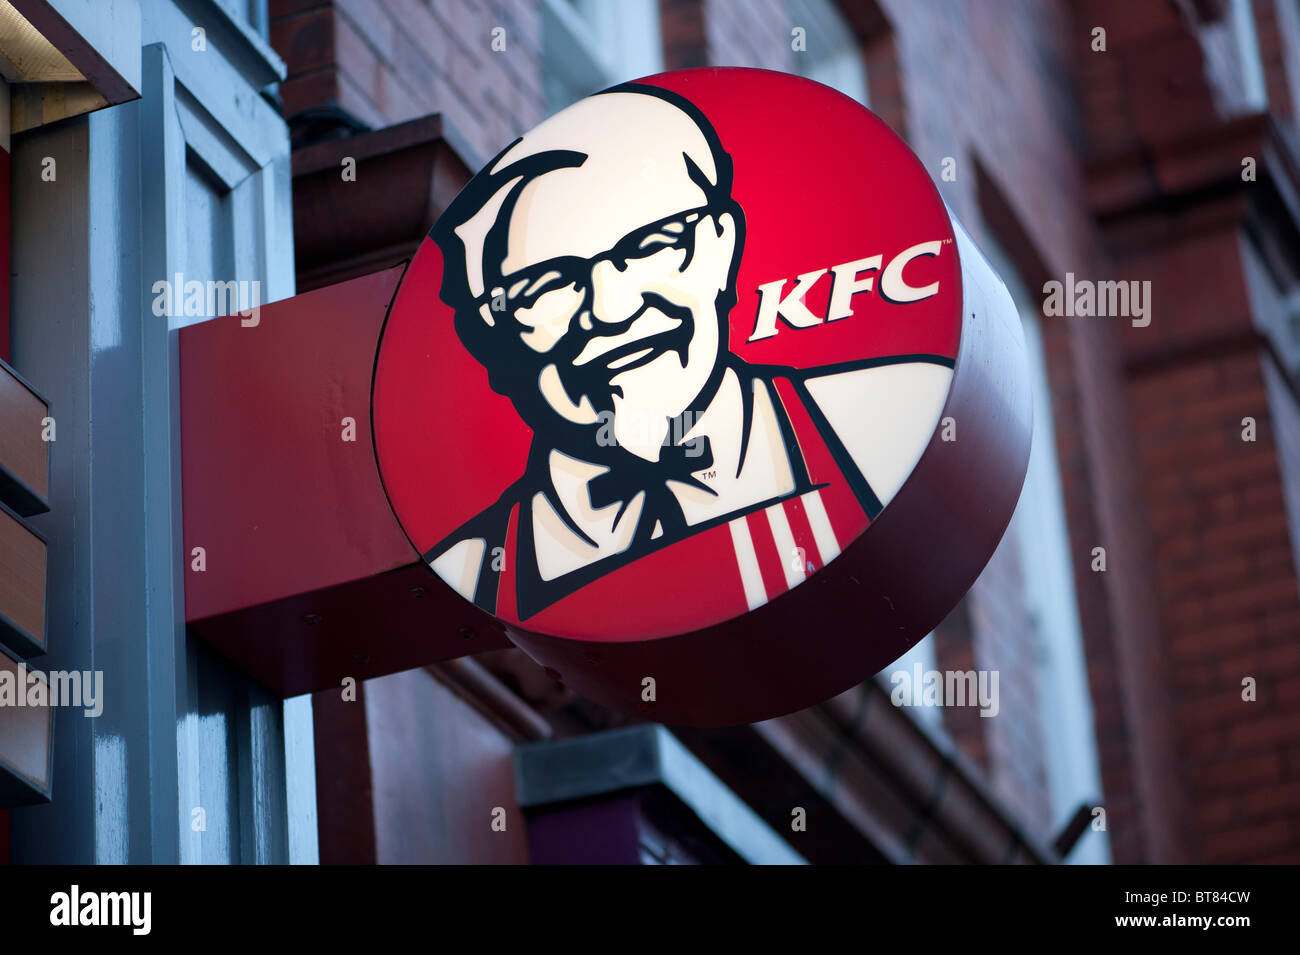 KFC Kentucky Fried Chicken illuminated sign logo Stock Photo